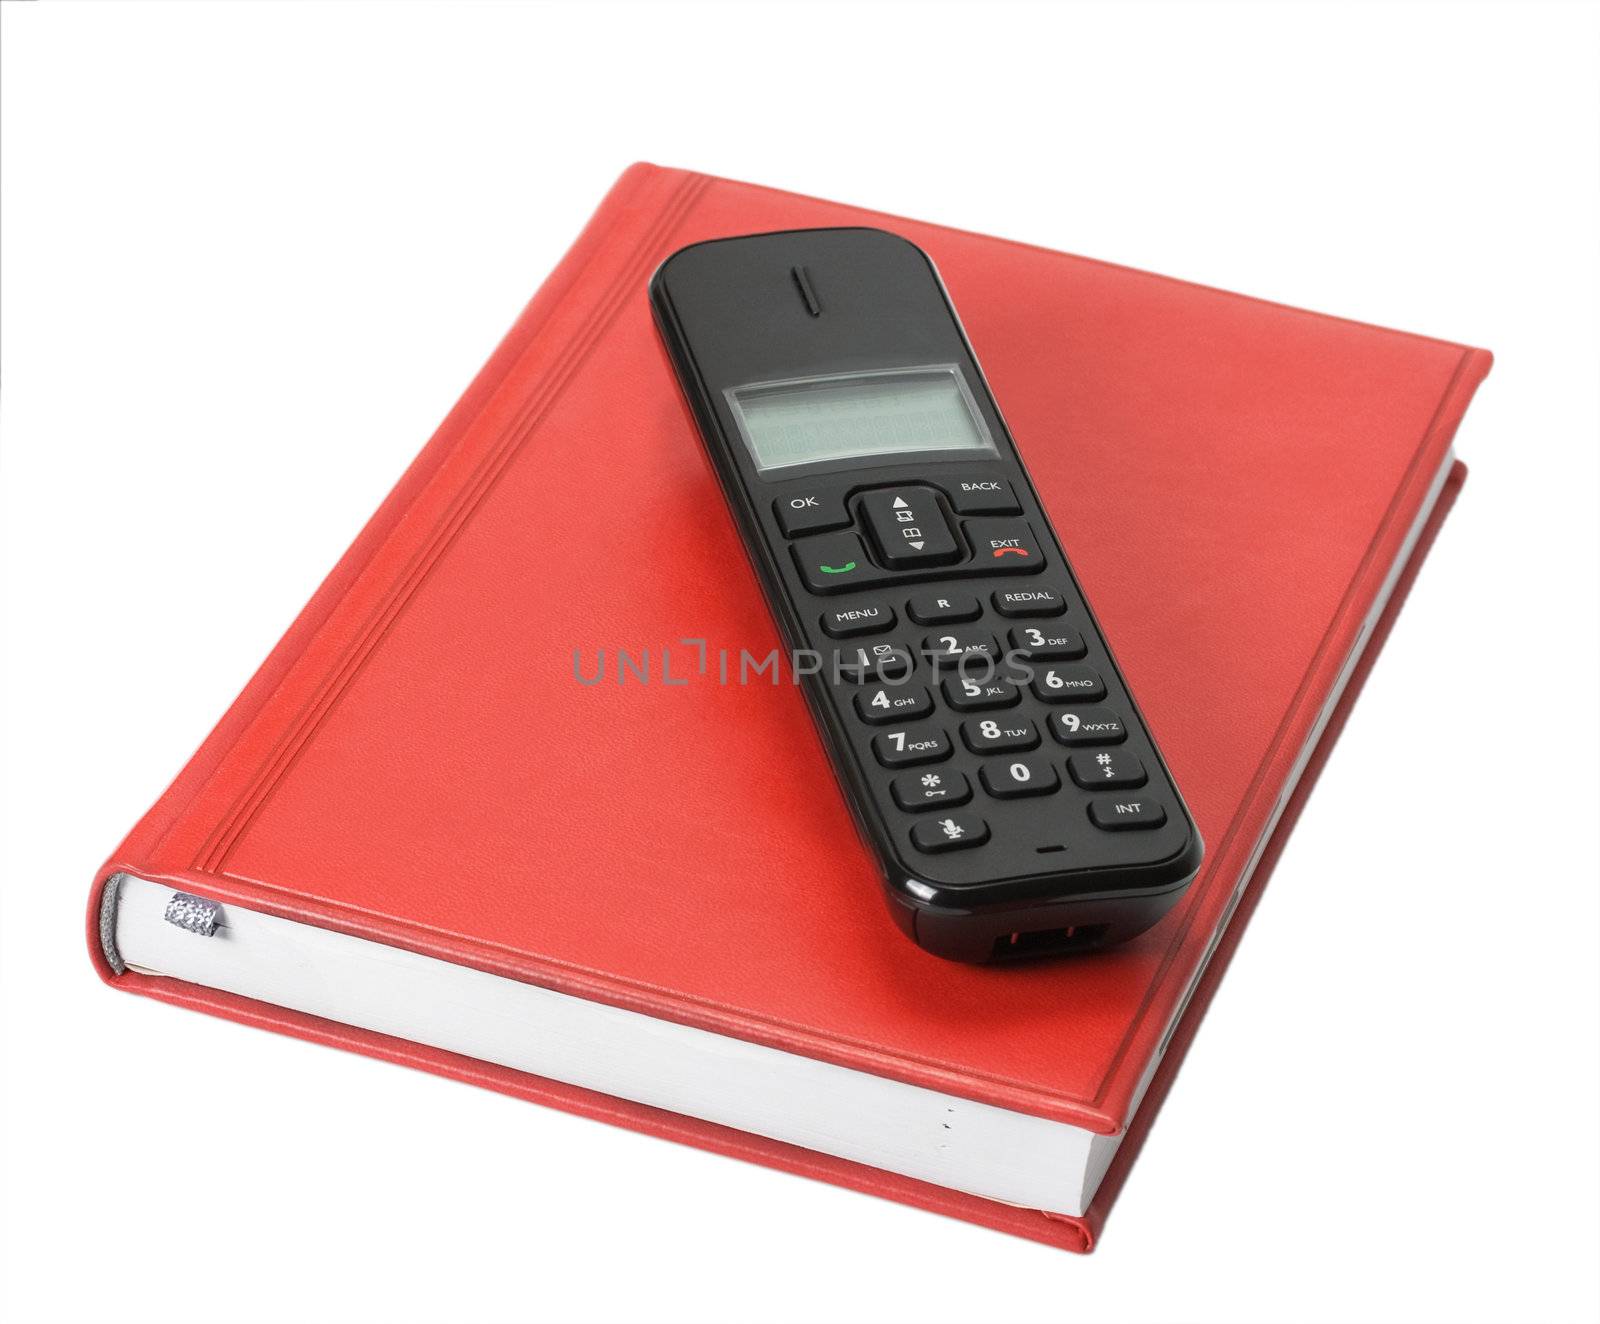 Black phone on red organizer isolated on white background